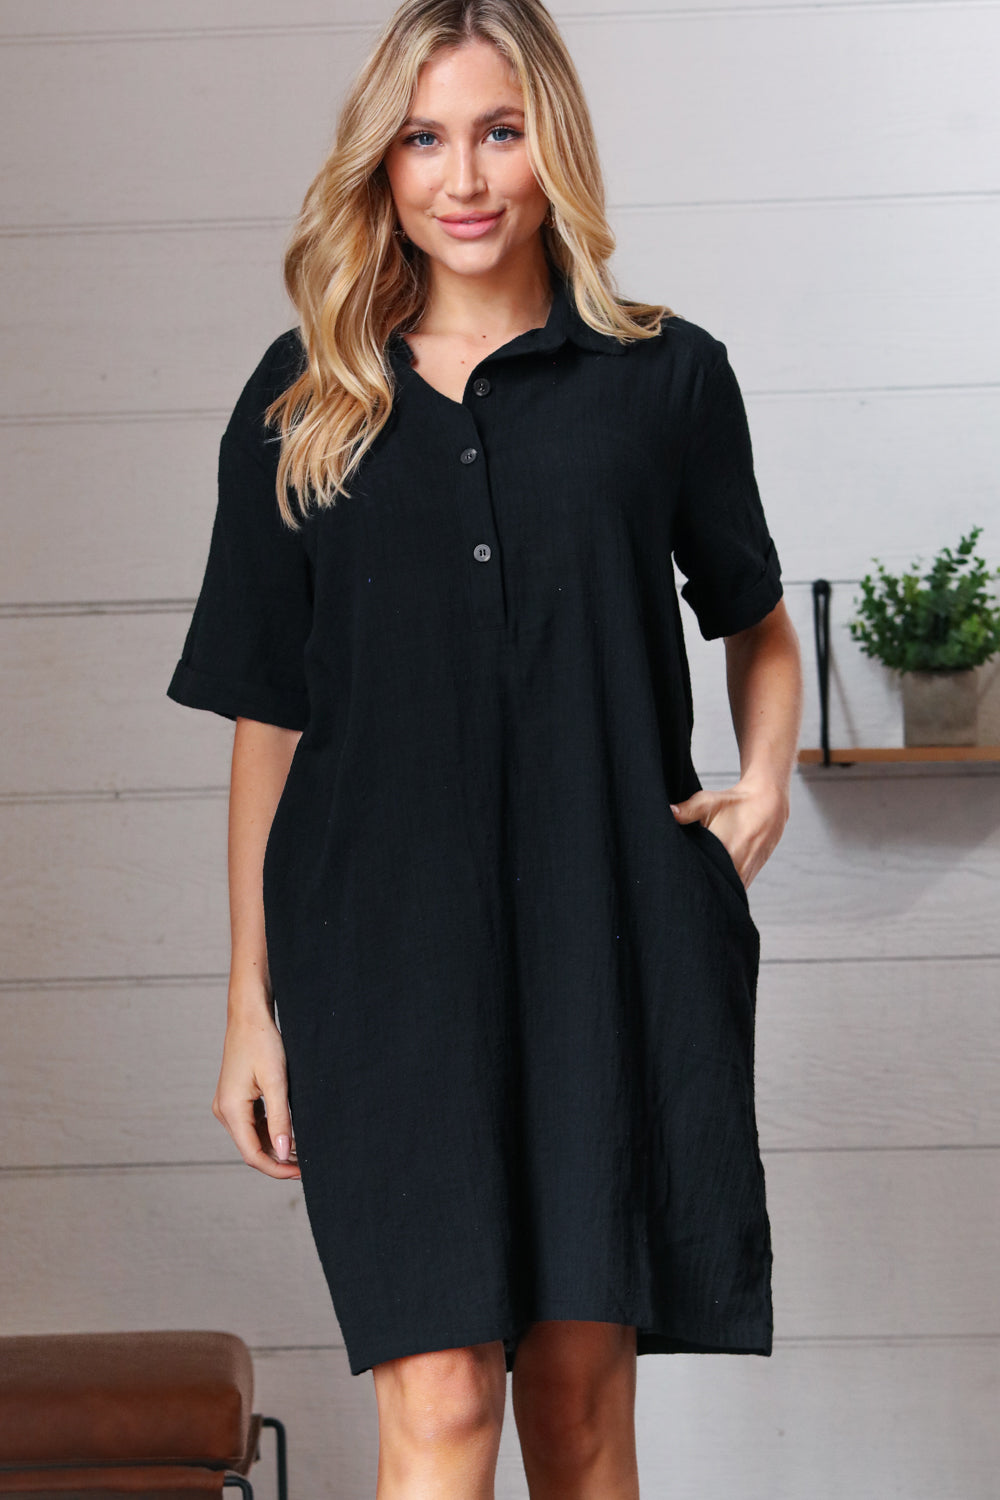 black button up dress, modest dresses, affordable modest clothing